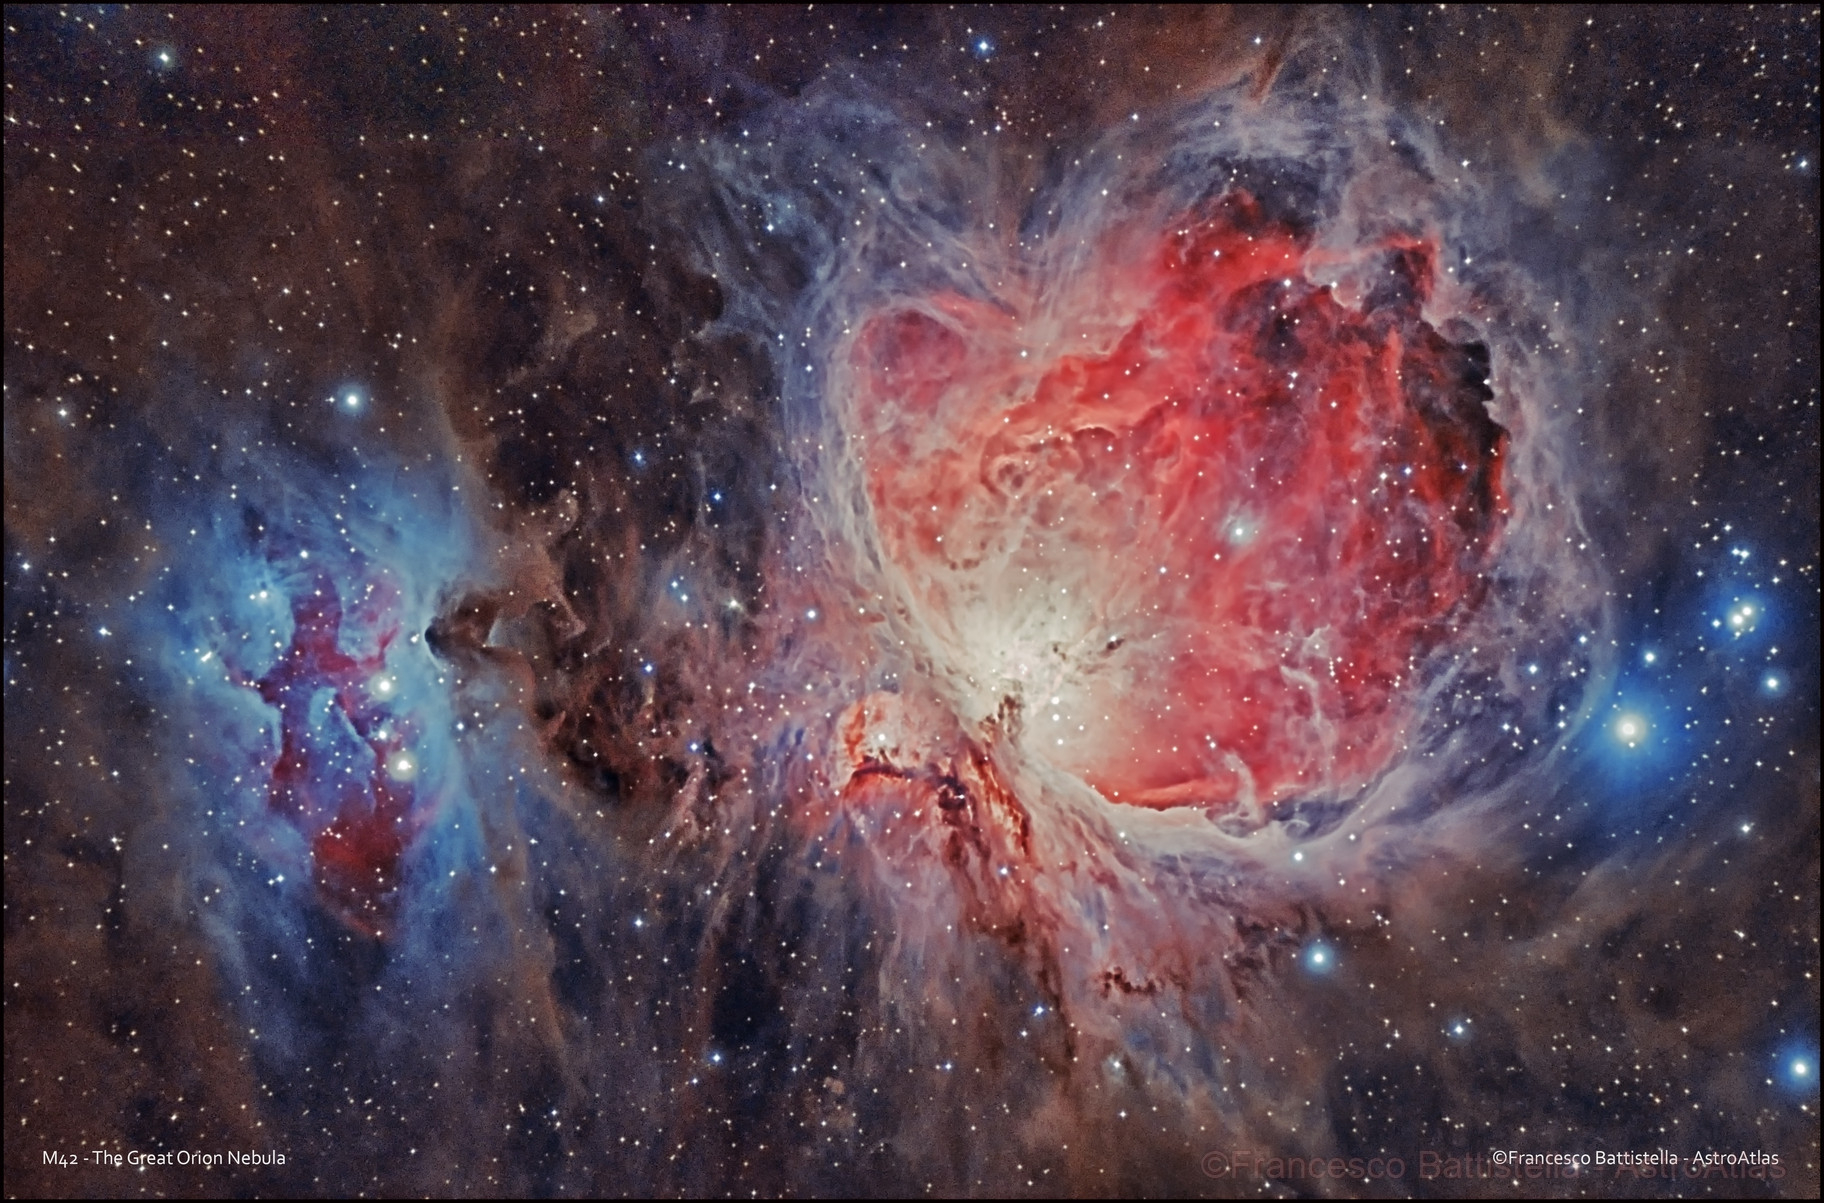 Apod: 2017 November 29 - M42: The Great Orion Nebula  Apod Nasa Calendar November